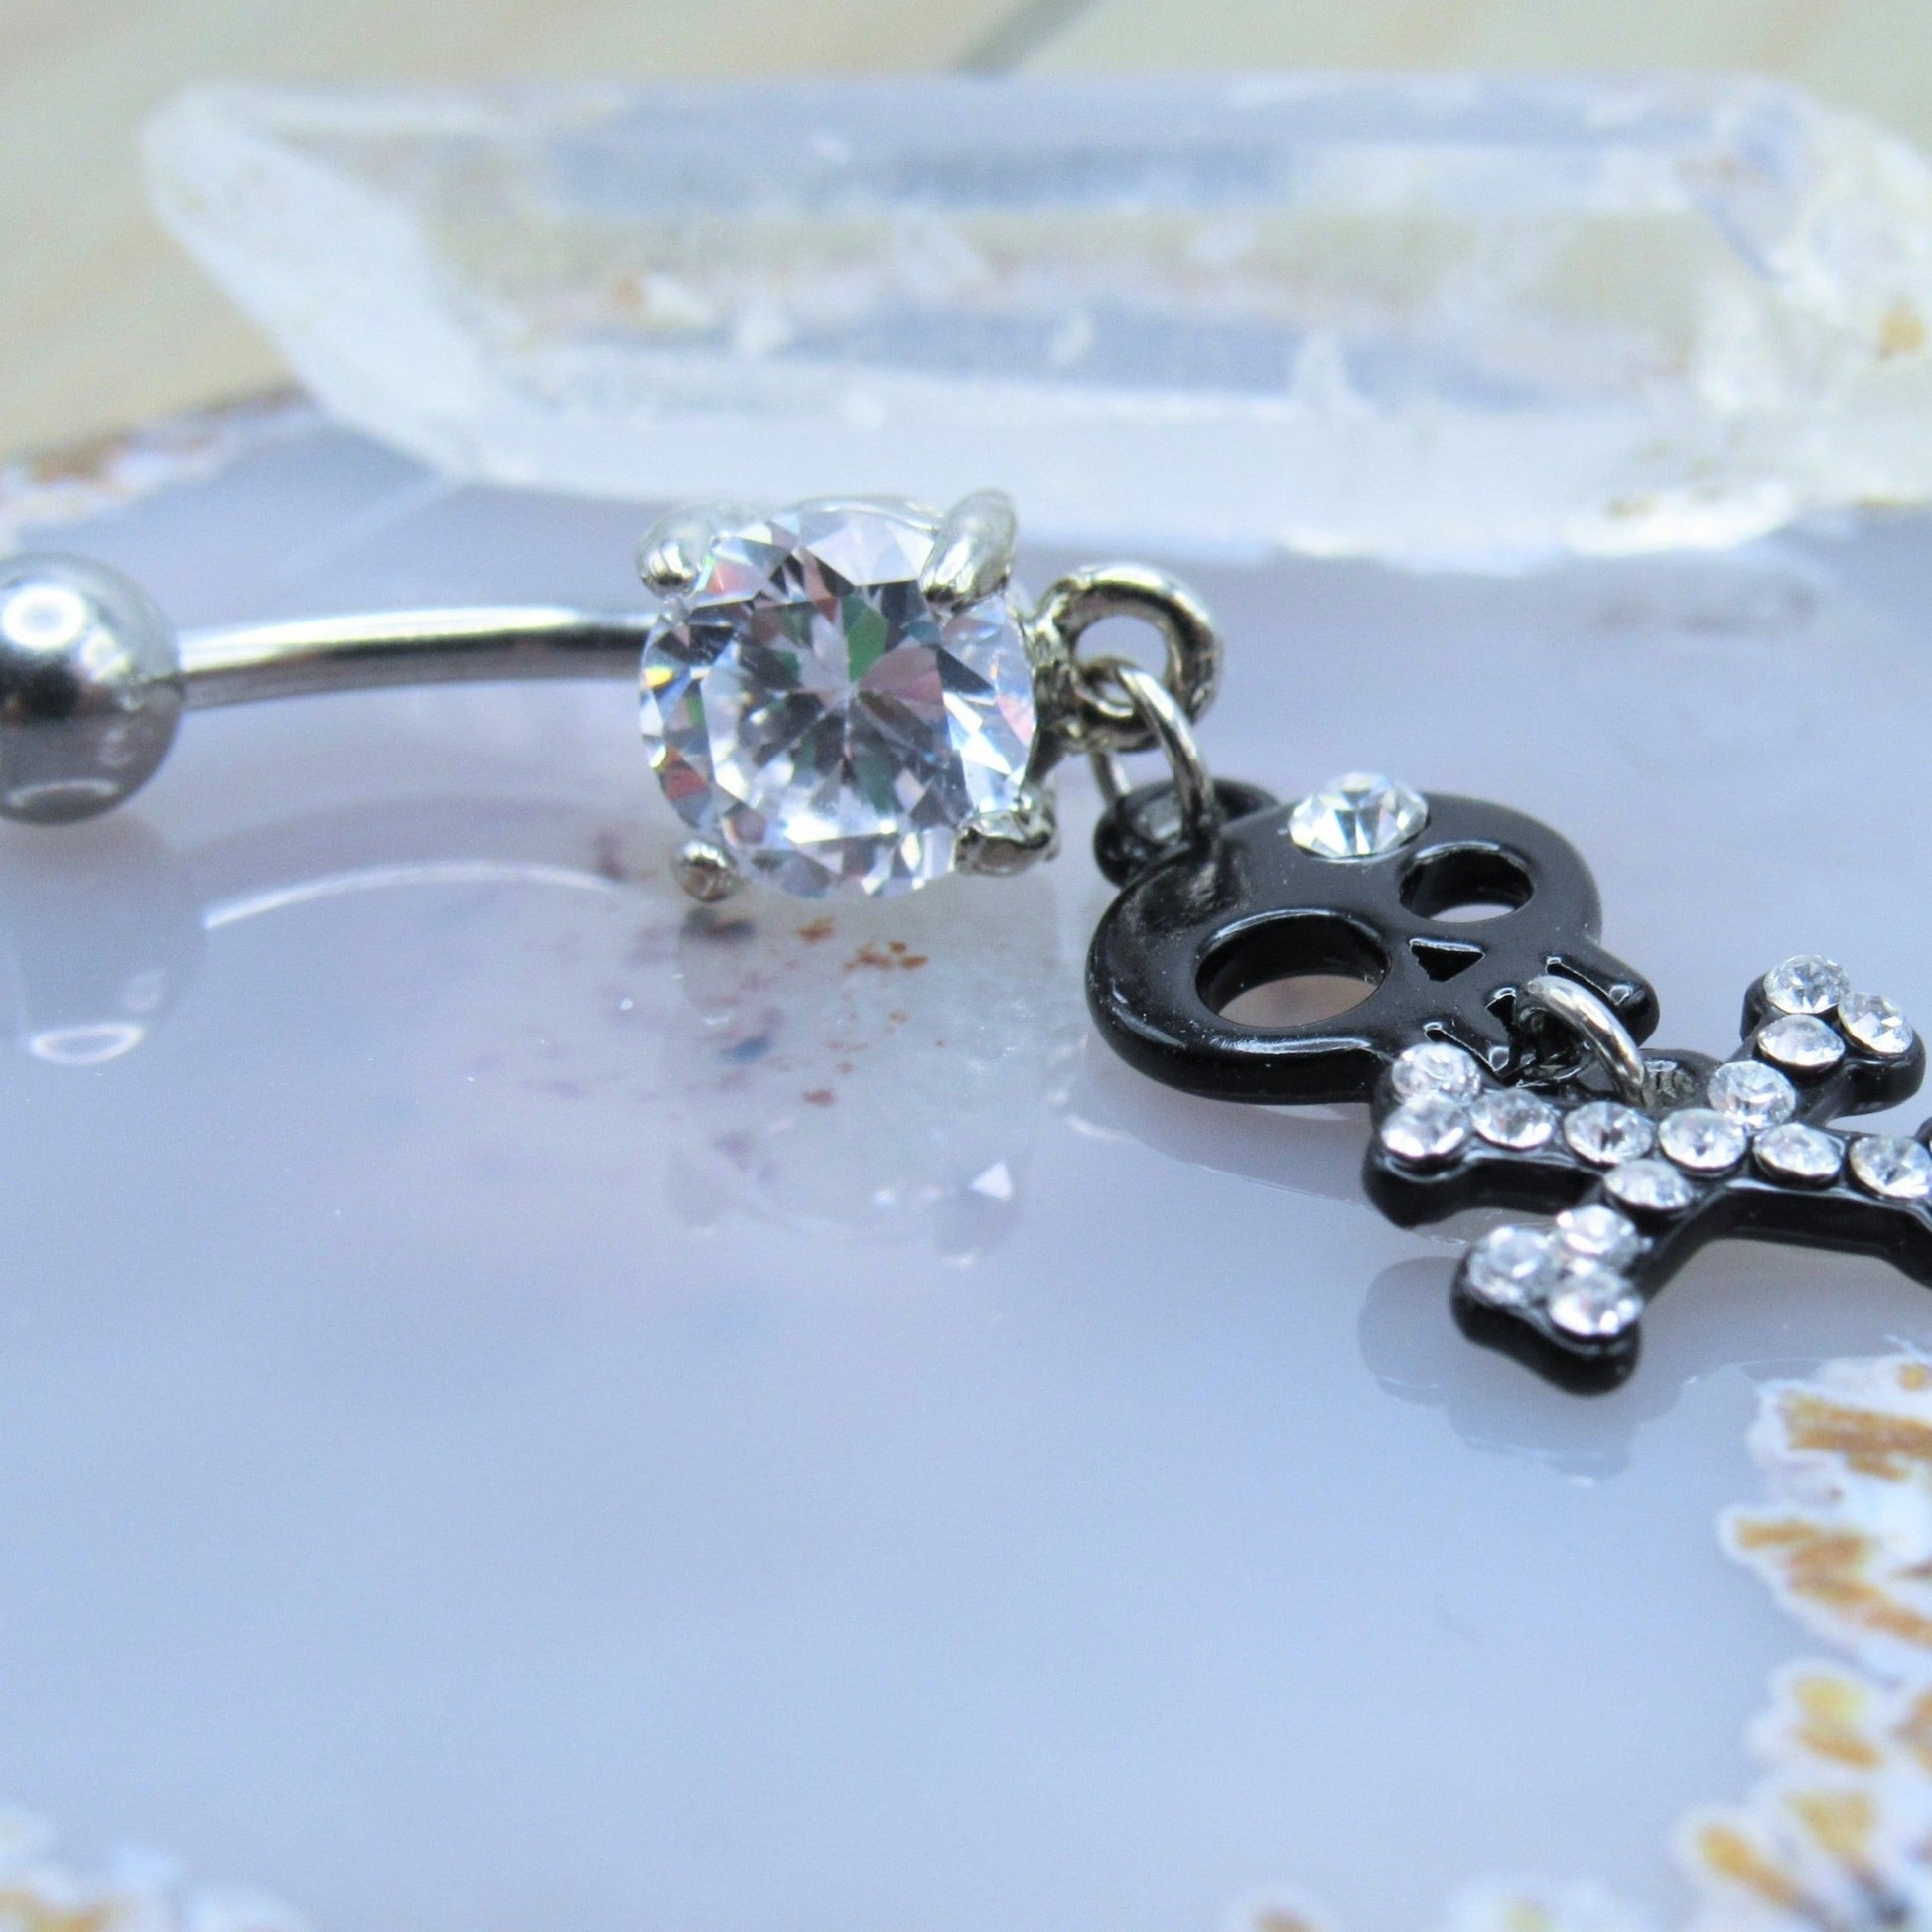 Black skull dangle belly button piercing ring 14g cz gemstones prong set studded crossbone navel bar - Siren Body Jewelry